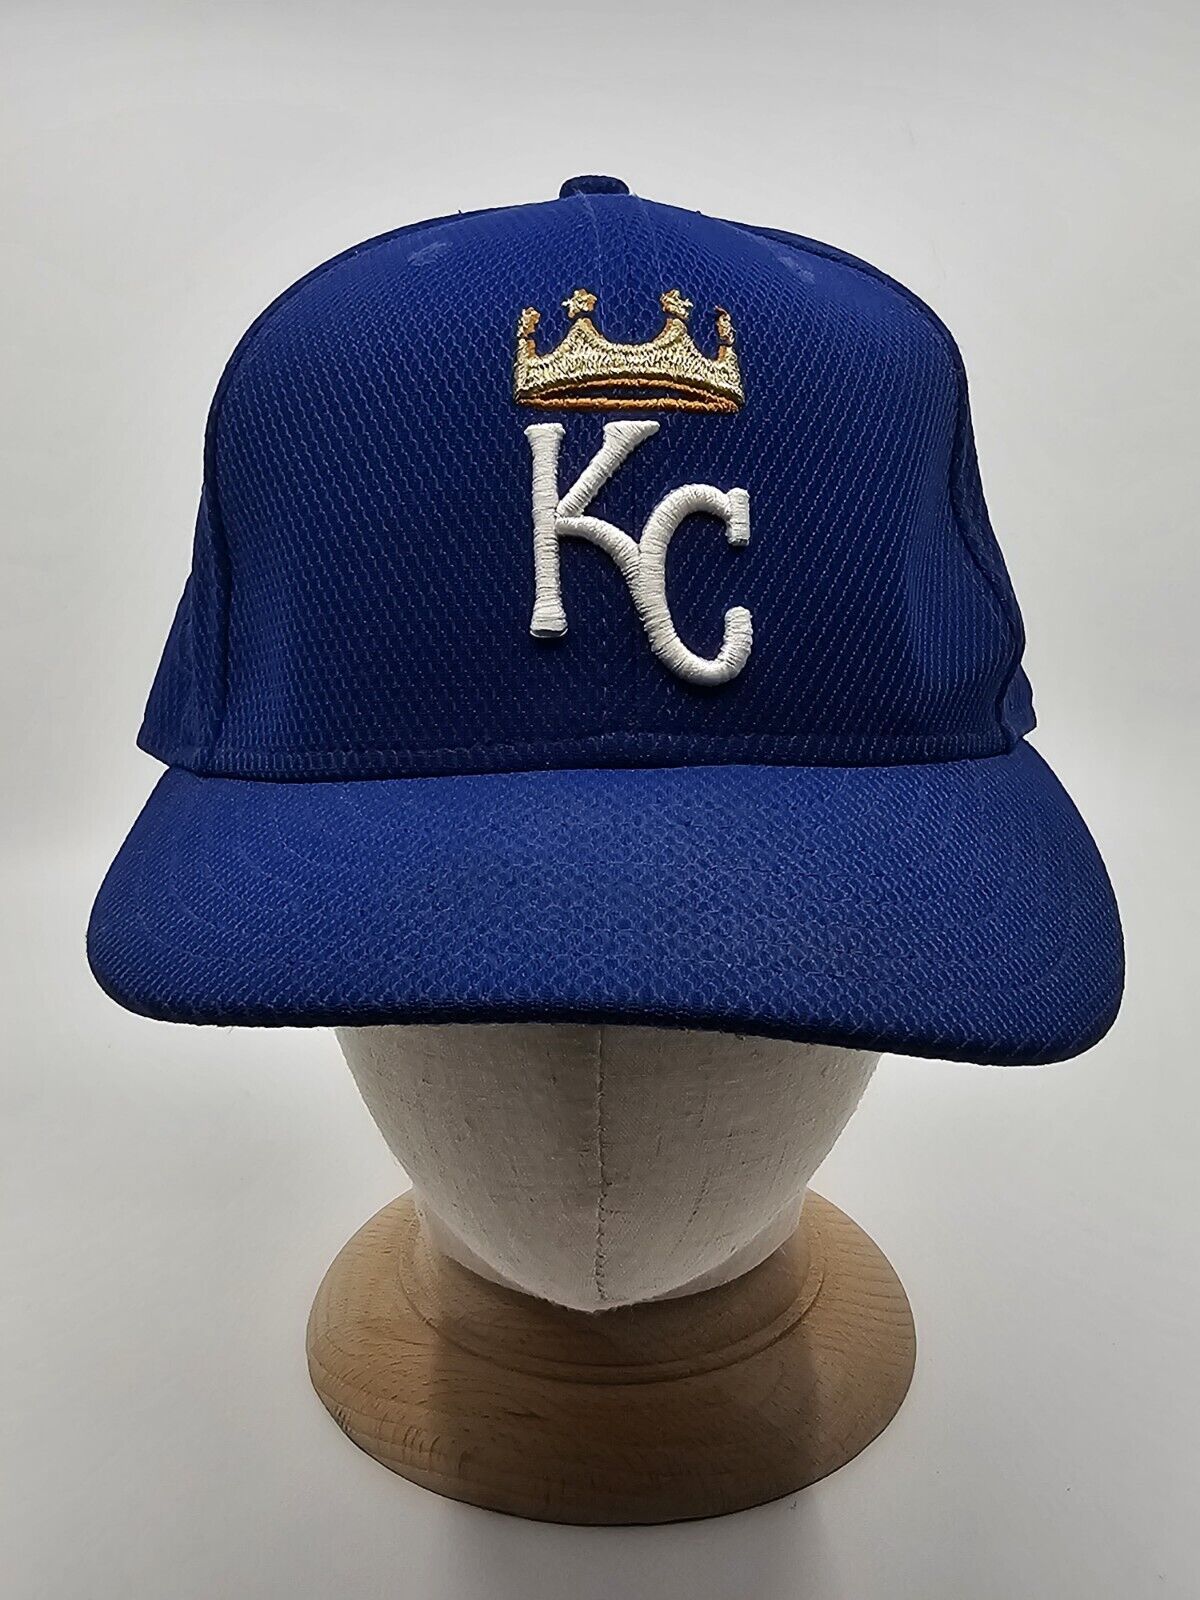 Primary image for Kansas City Royals New Era 59Fifty MLB Game Diamond Royal Blue Hat Cap